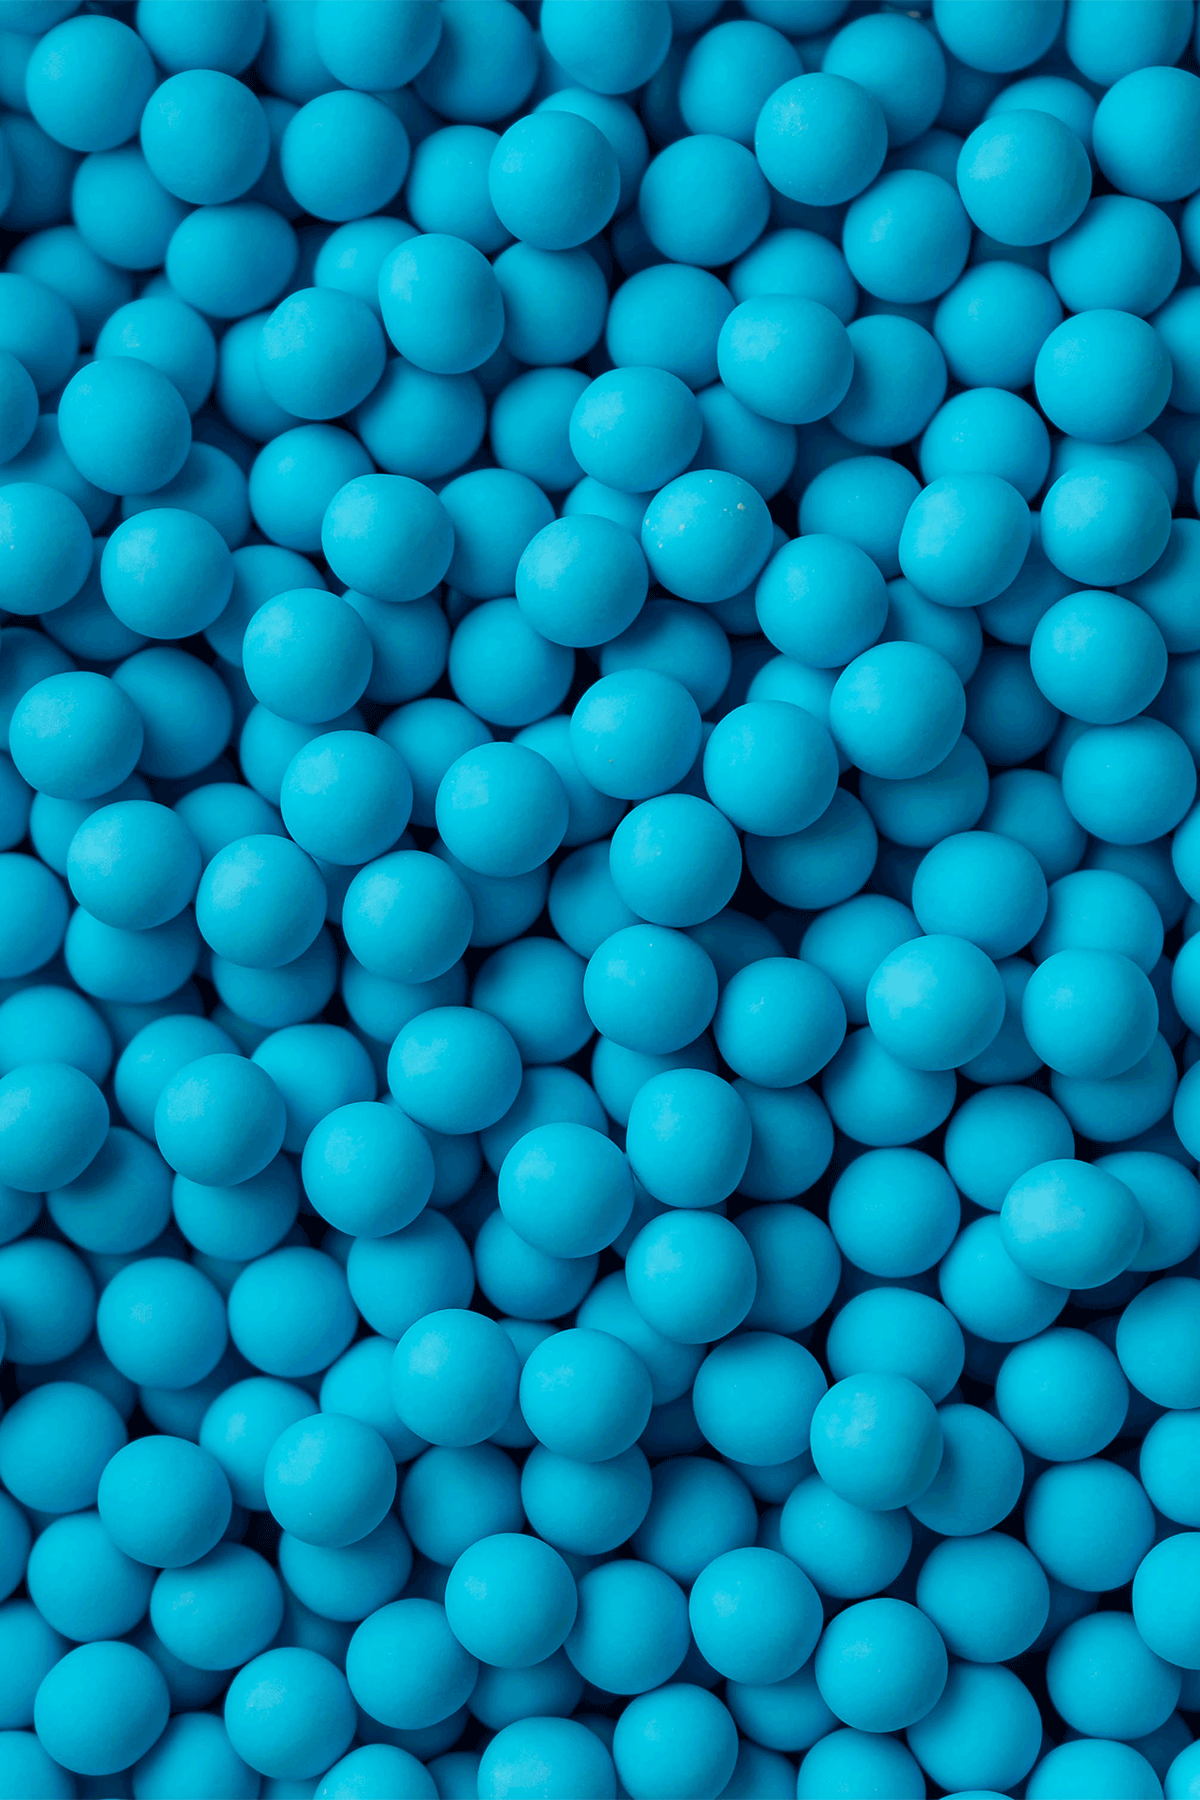 Matt Chocolate Balls - Turquoise - (Large/10mm) Sprinkles Sprinkly